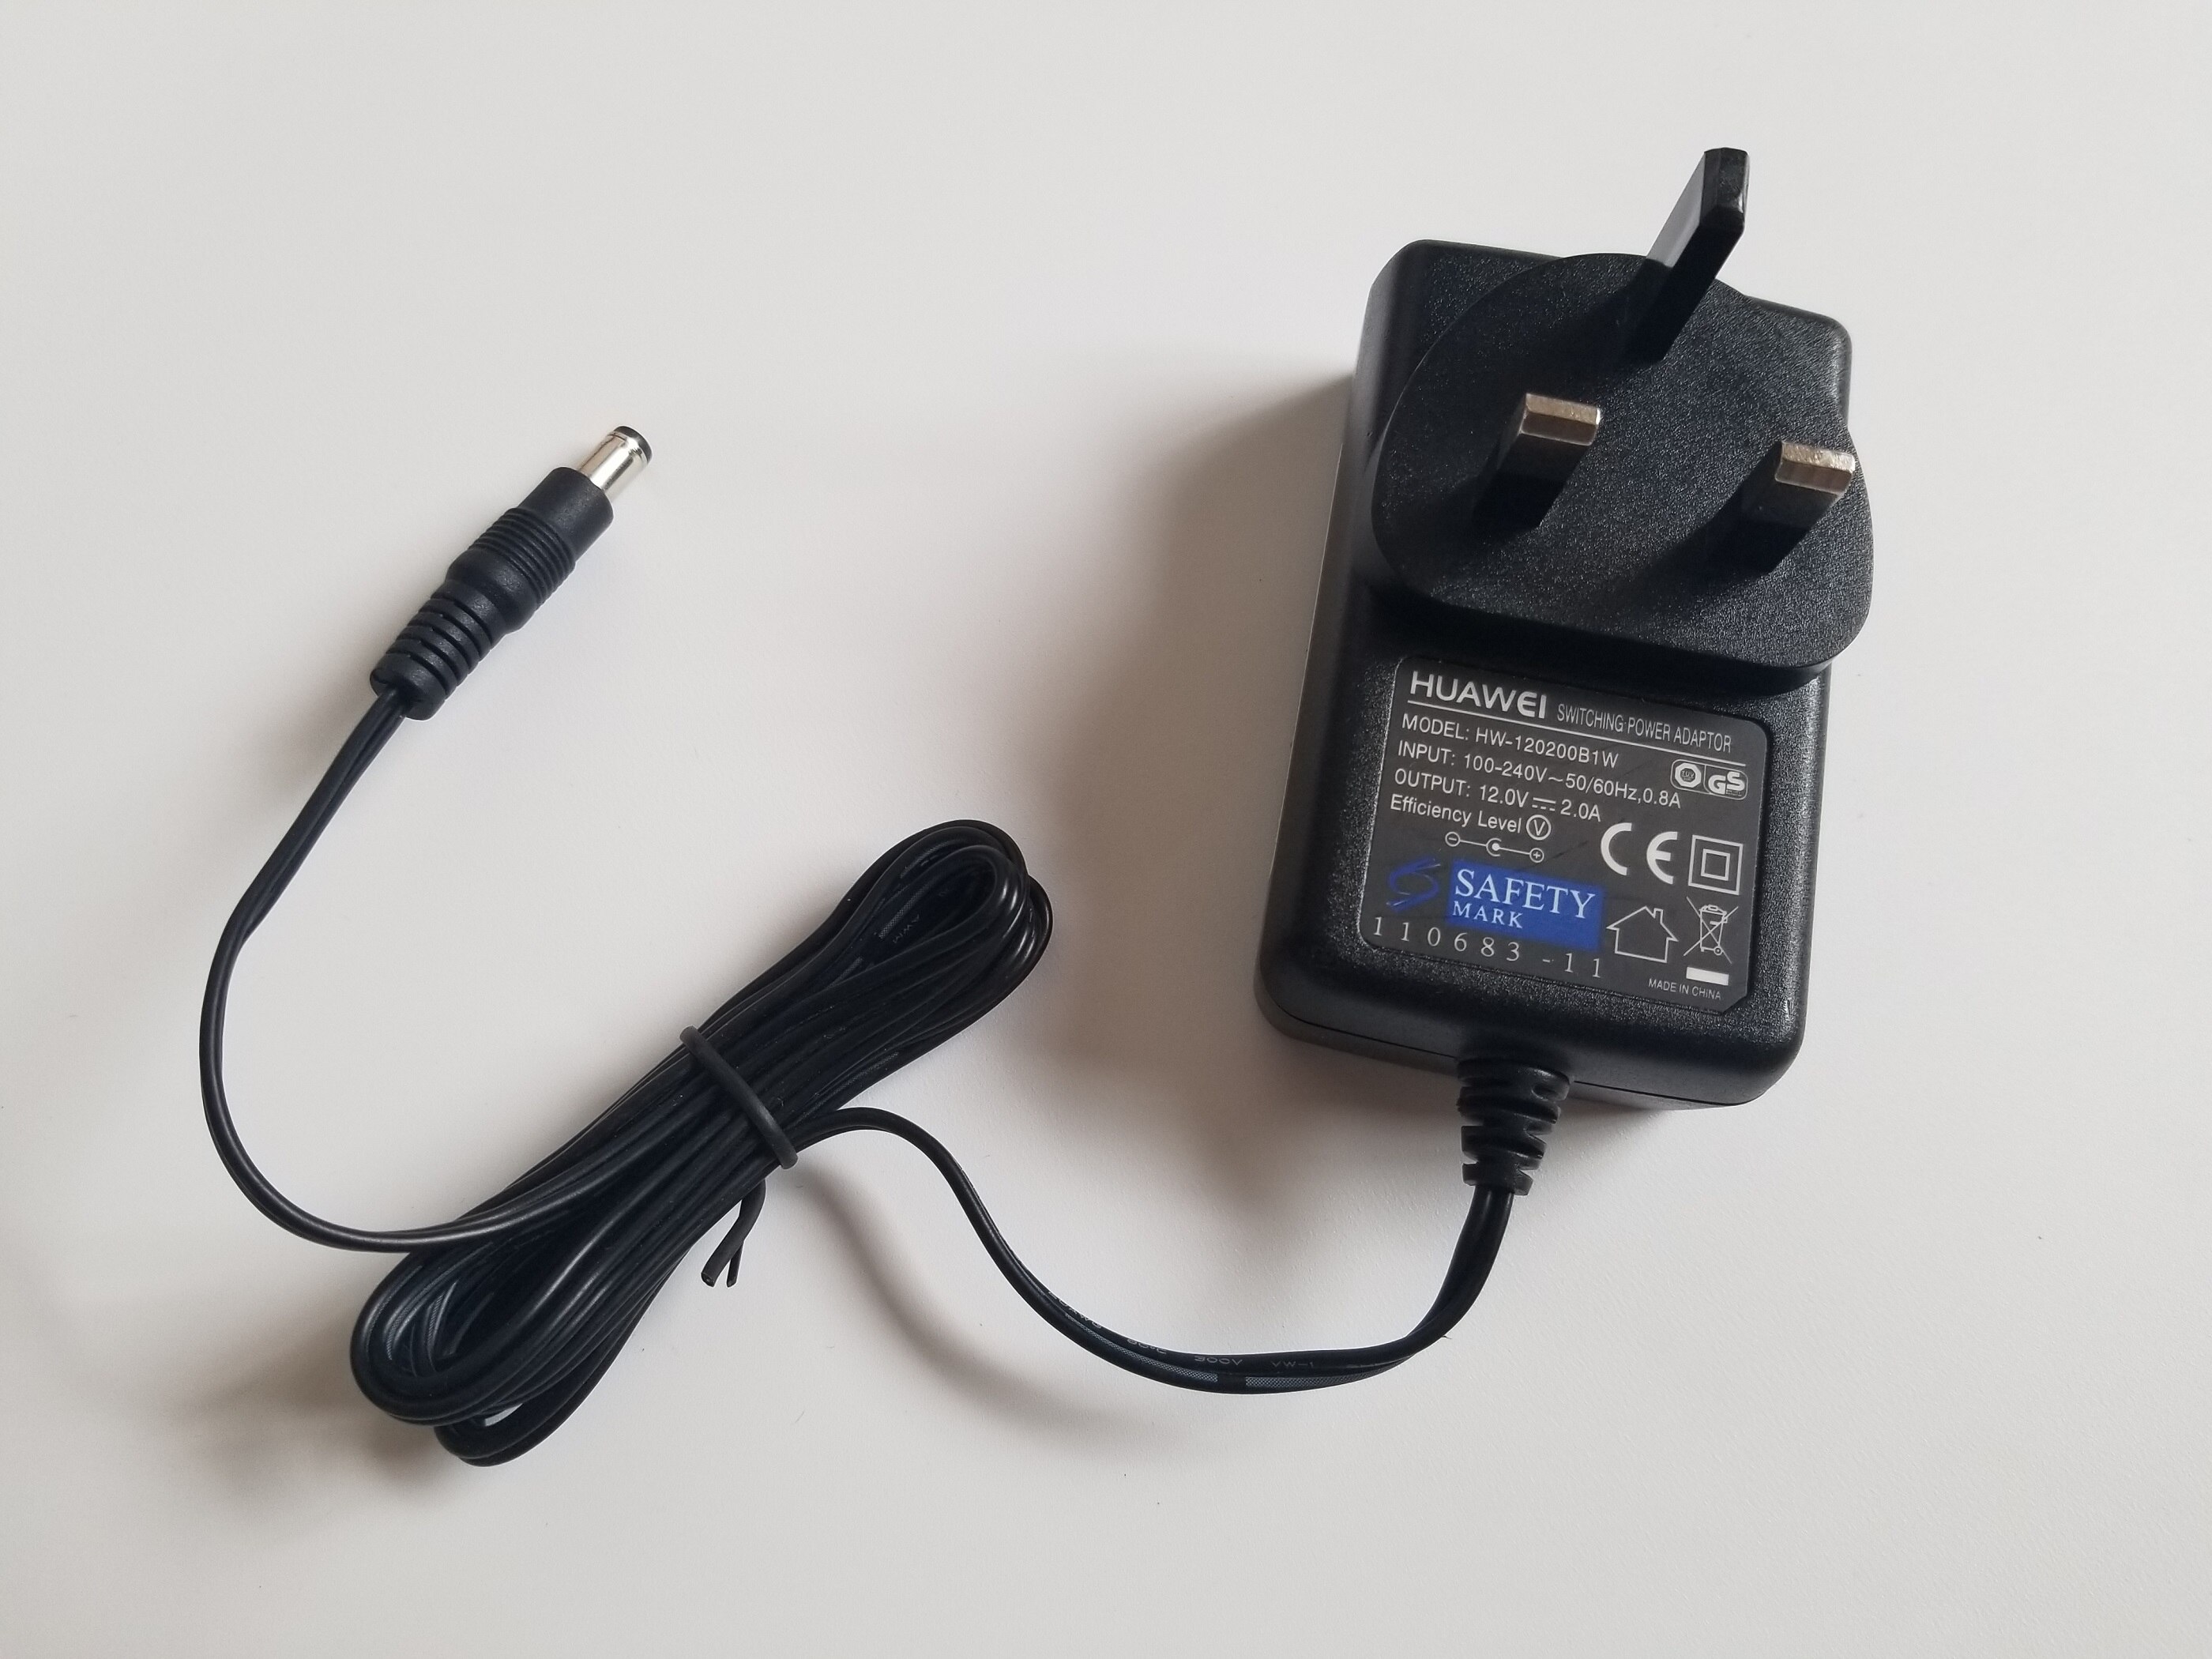 HUAWEI ADAPTER EU US EN US Plug Power Adapter OUTPUT 12V--1A